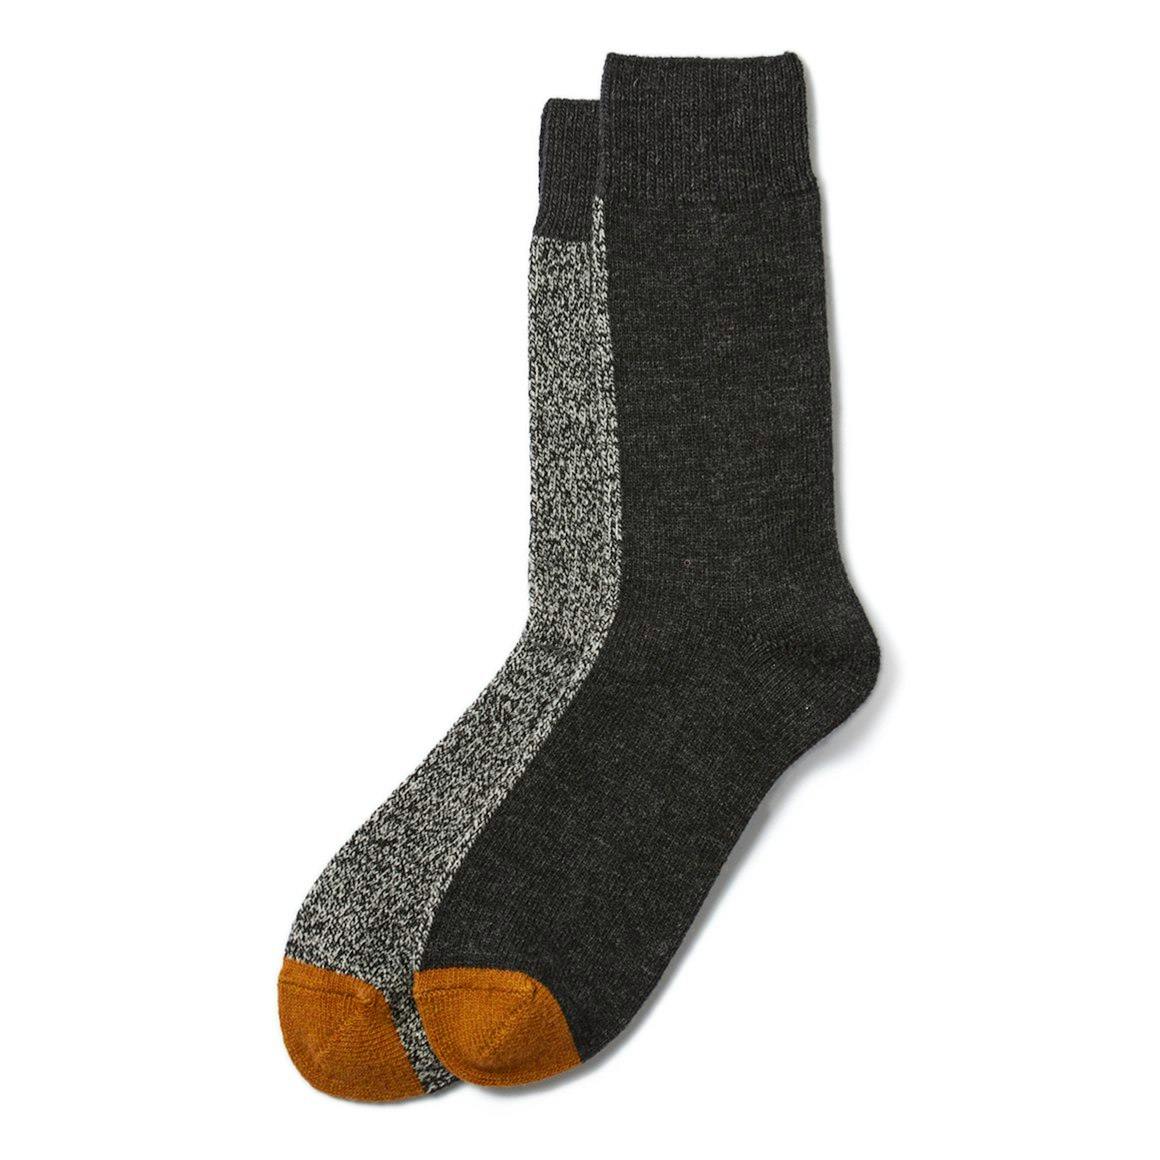 Woolen Half and Half Socks